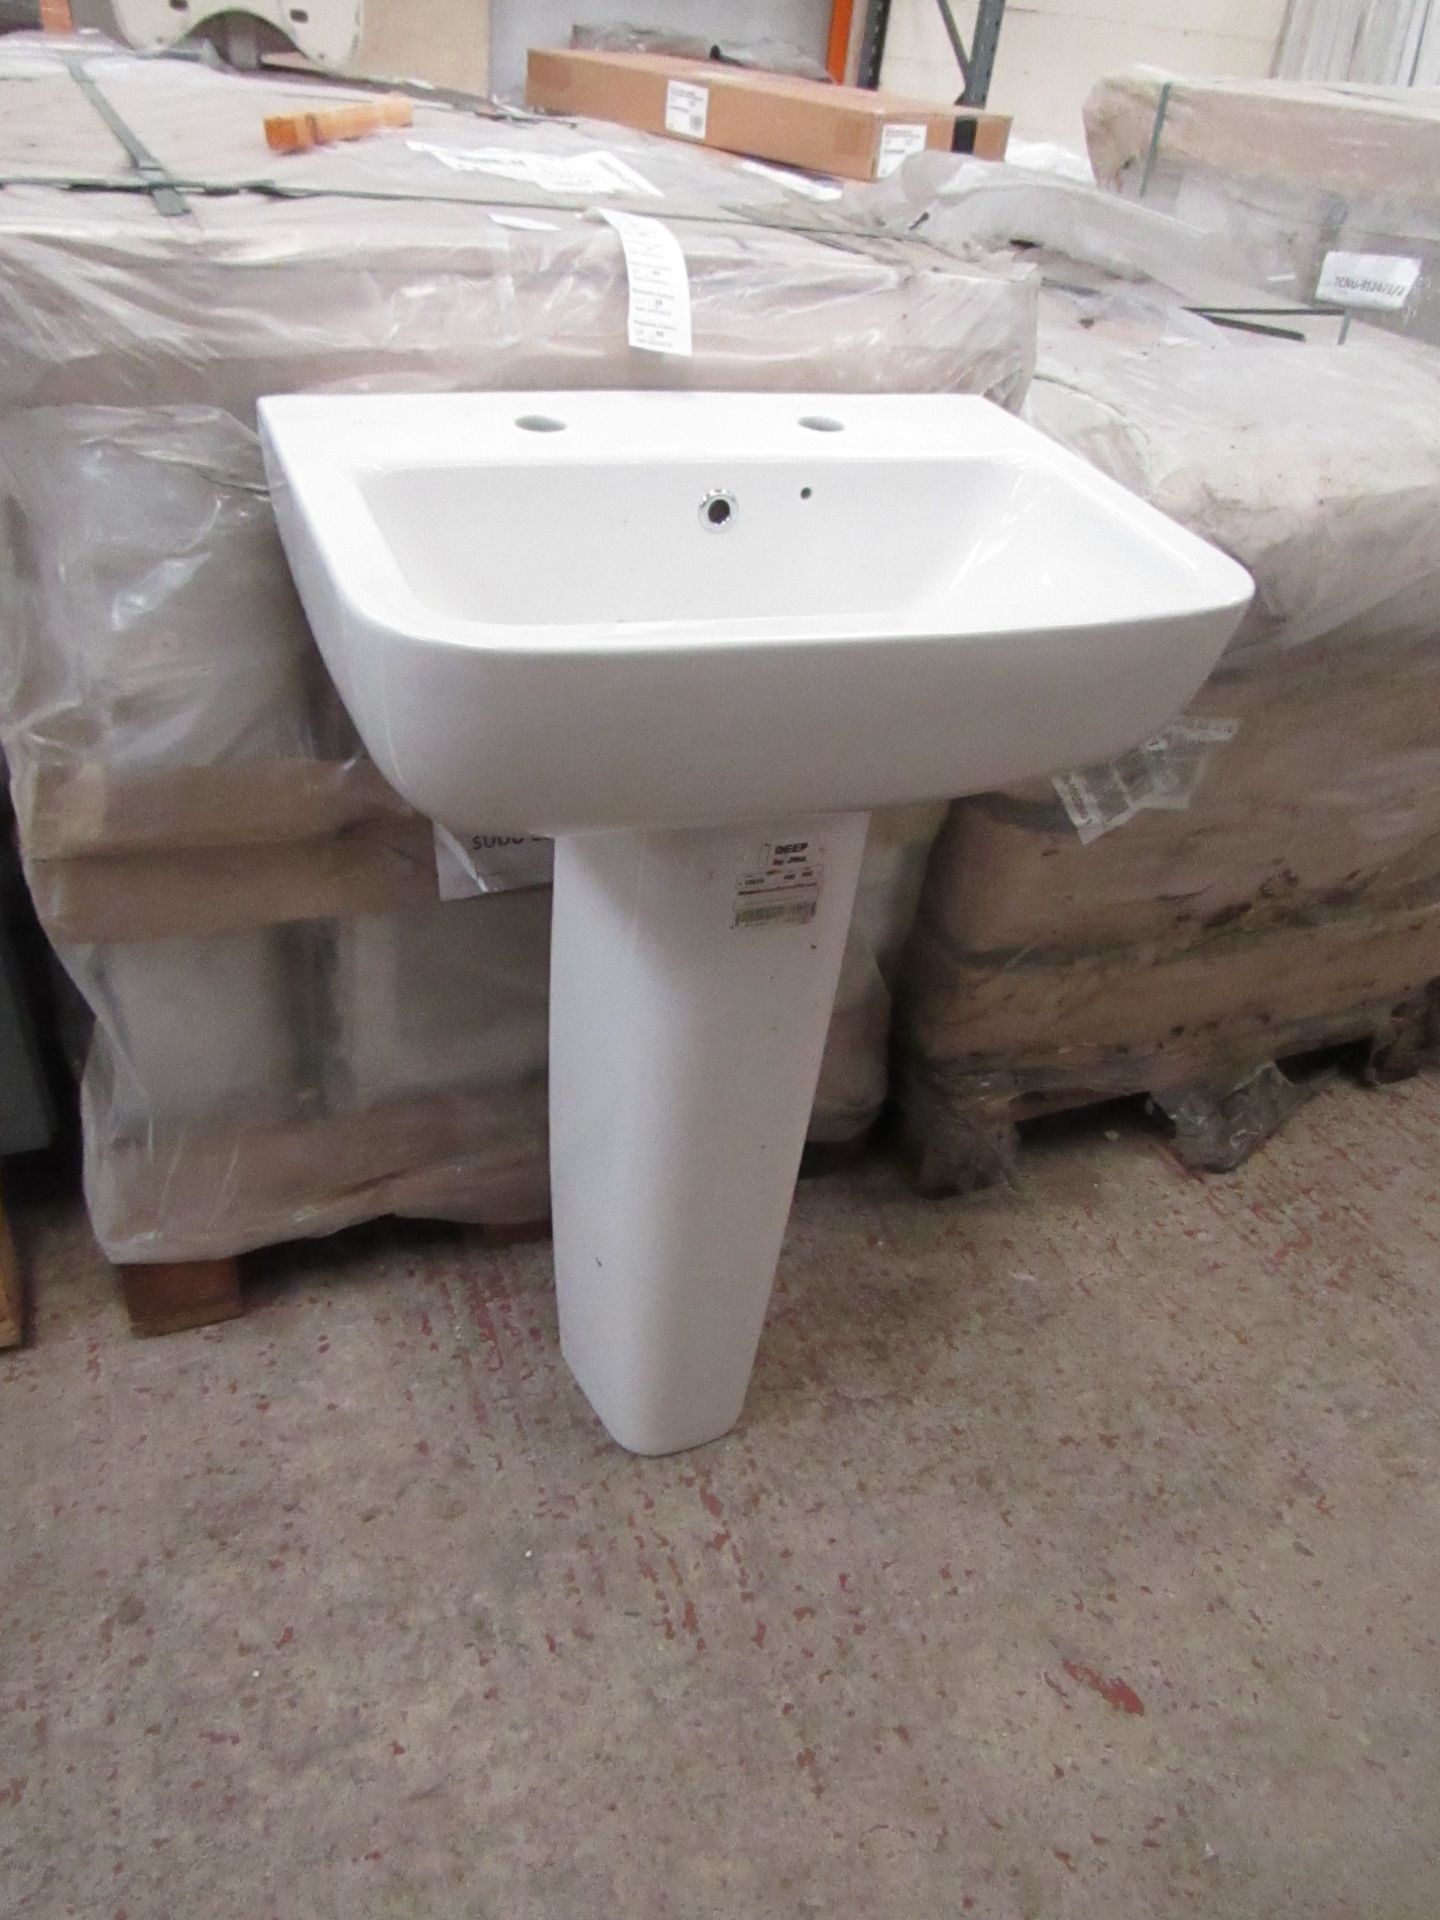 Lecico 54cm 2 tap hole sink with Jika universal pedestal, both unused